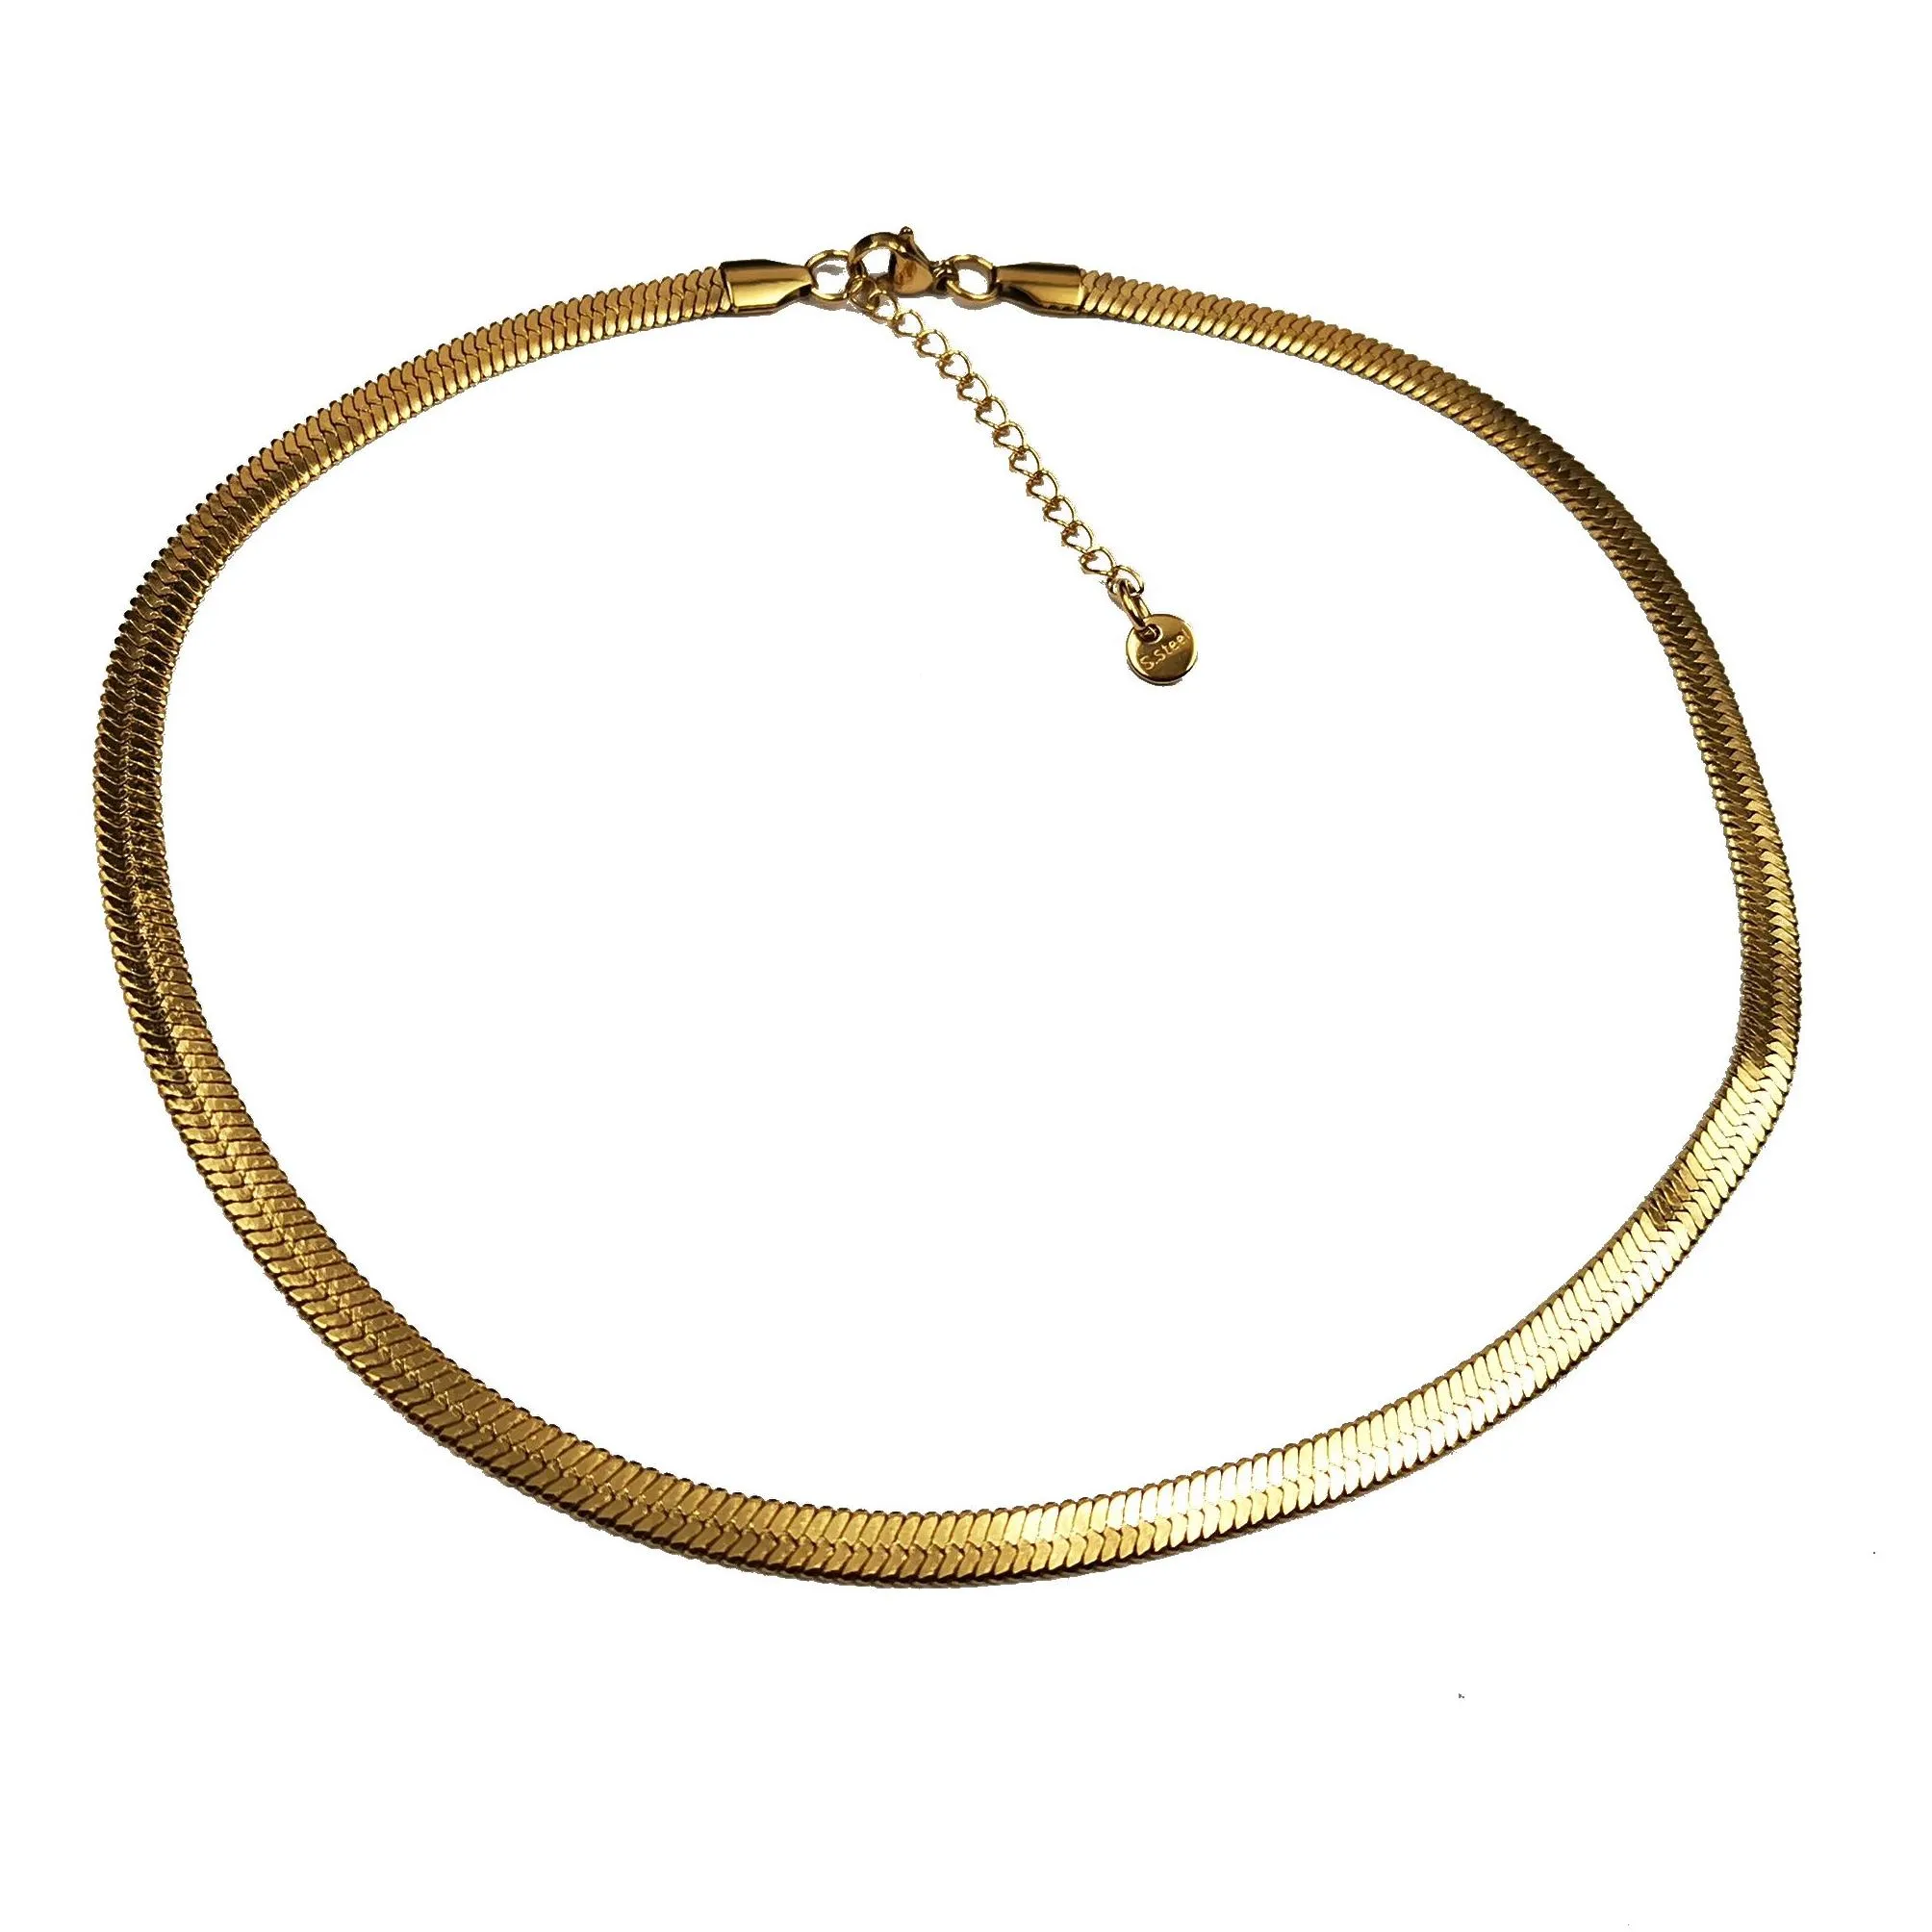 fashion golden black flat snake chain herringbone choker necklace for women gifts stainless steel 5mm 15.7add4cm